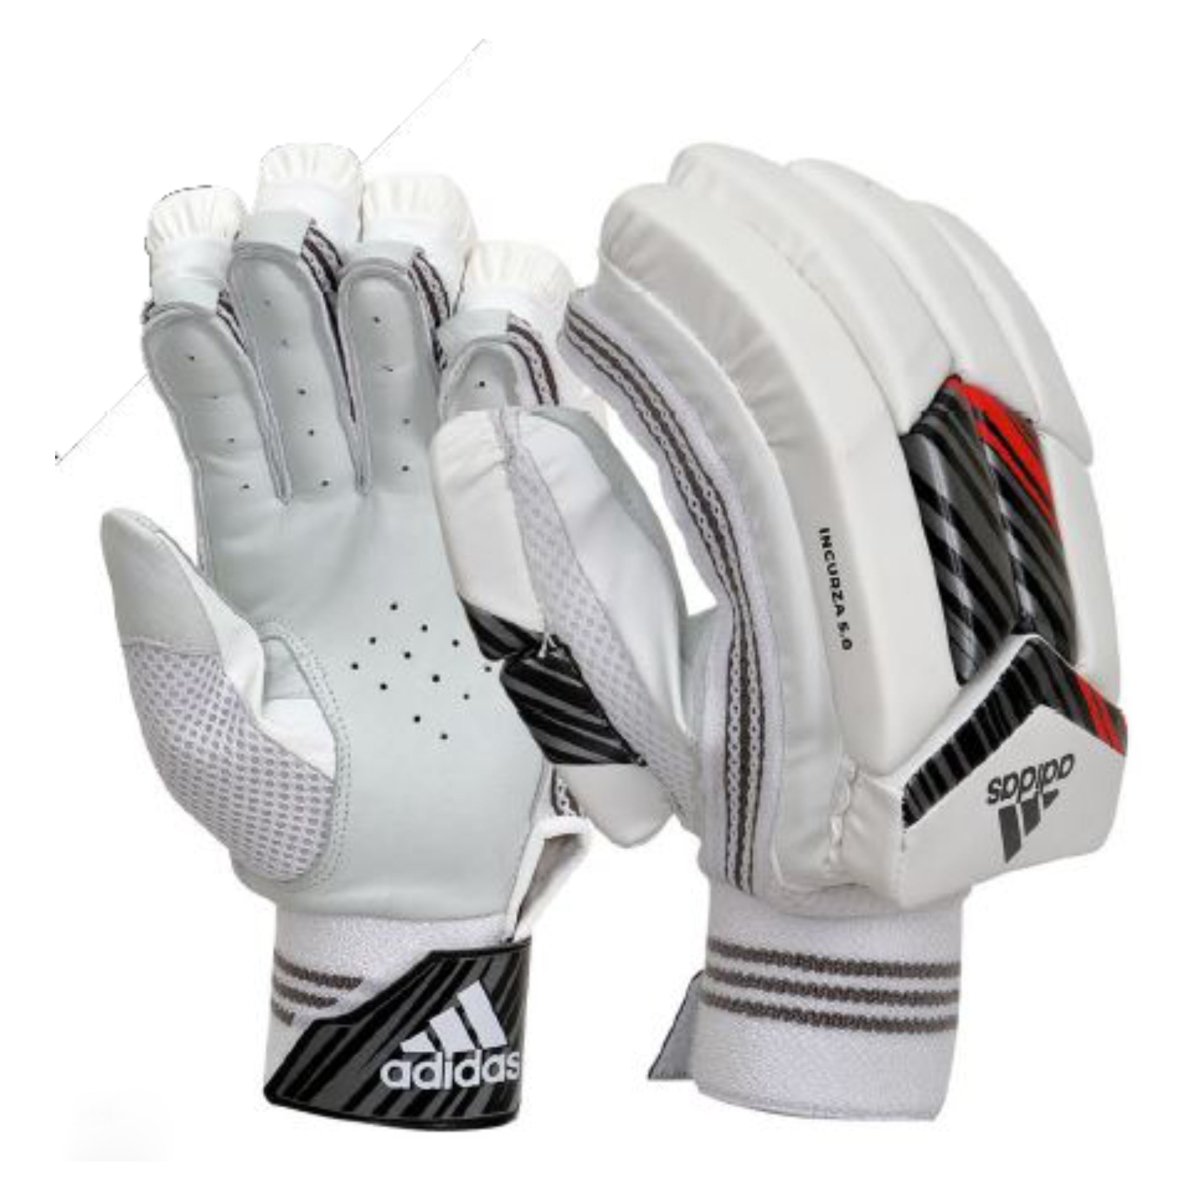 Adidas Incurza 5.0 Cricket Batting Gloves Junior.